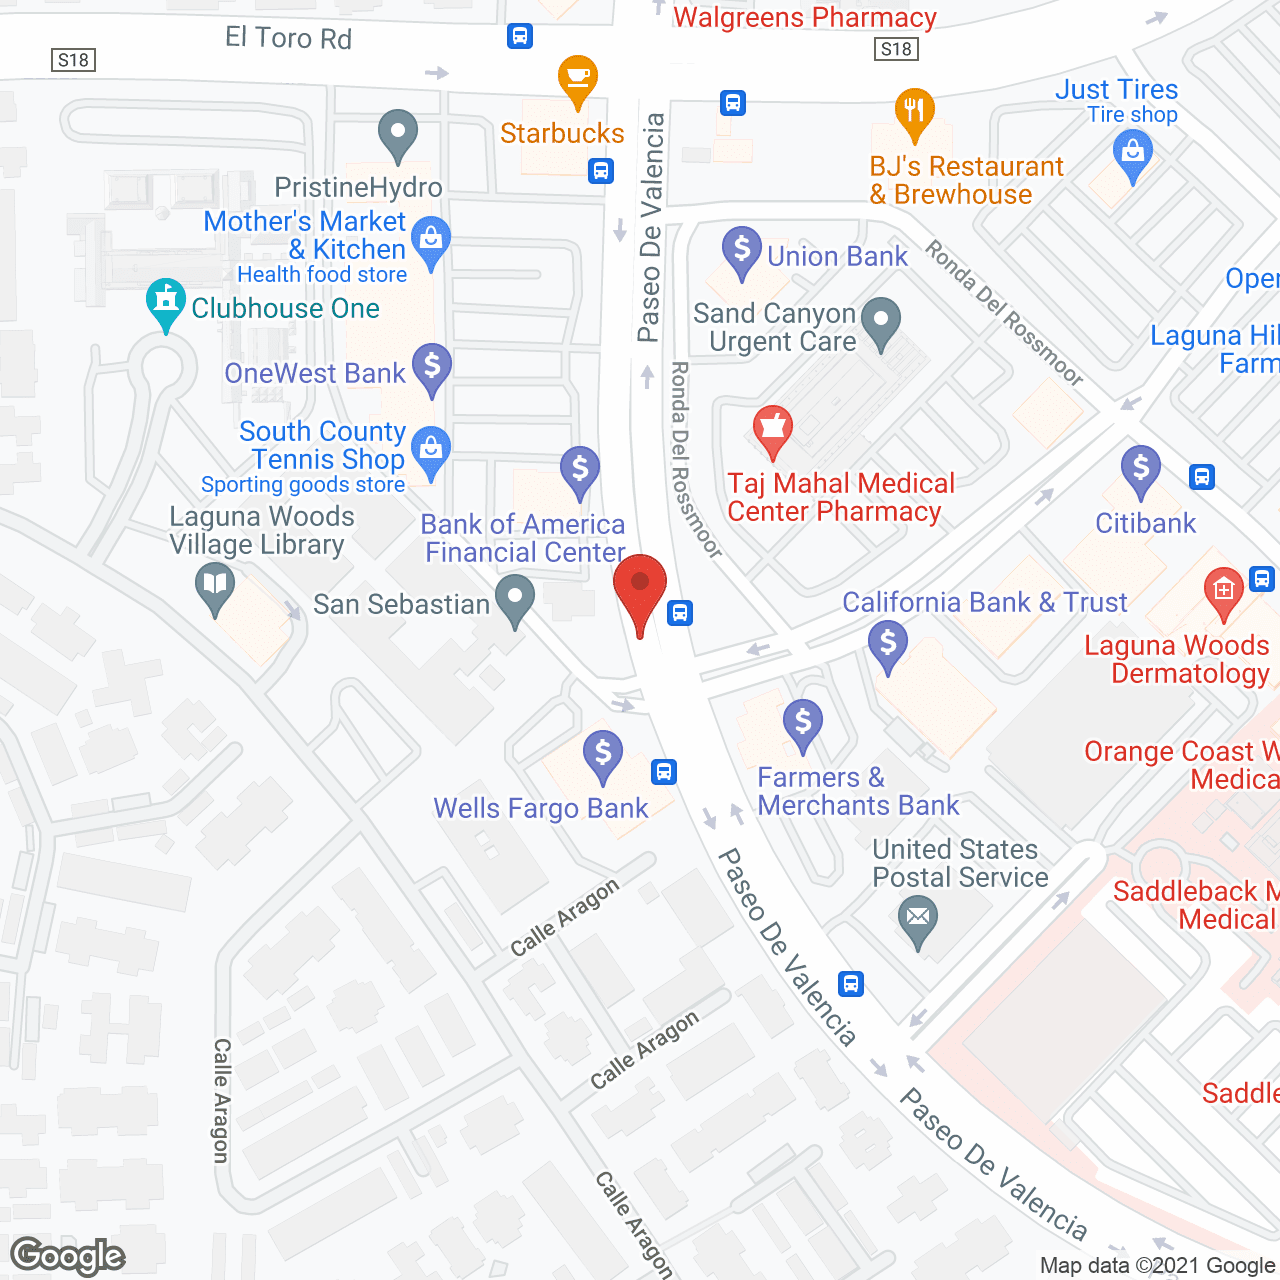 San Sebastian in google map